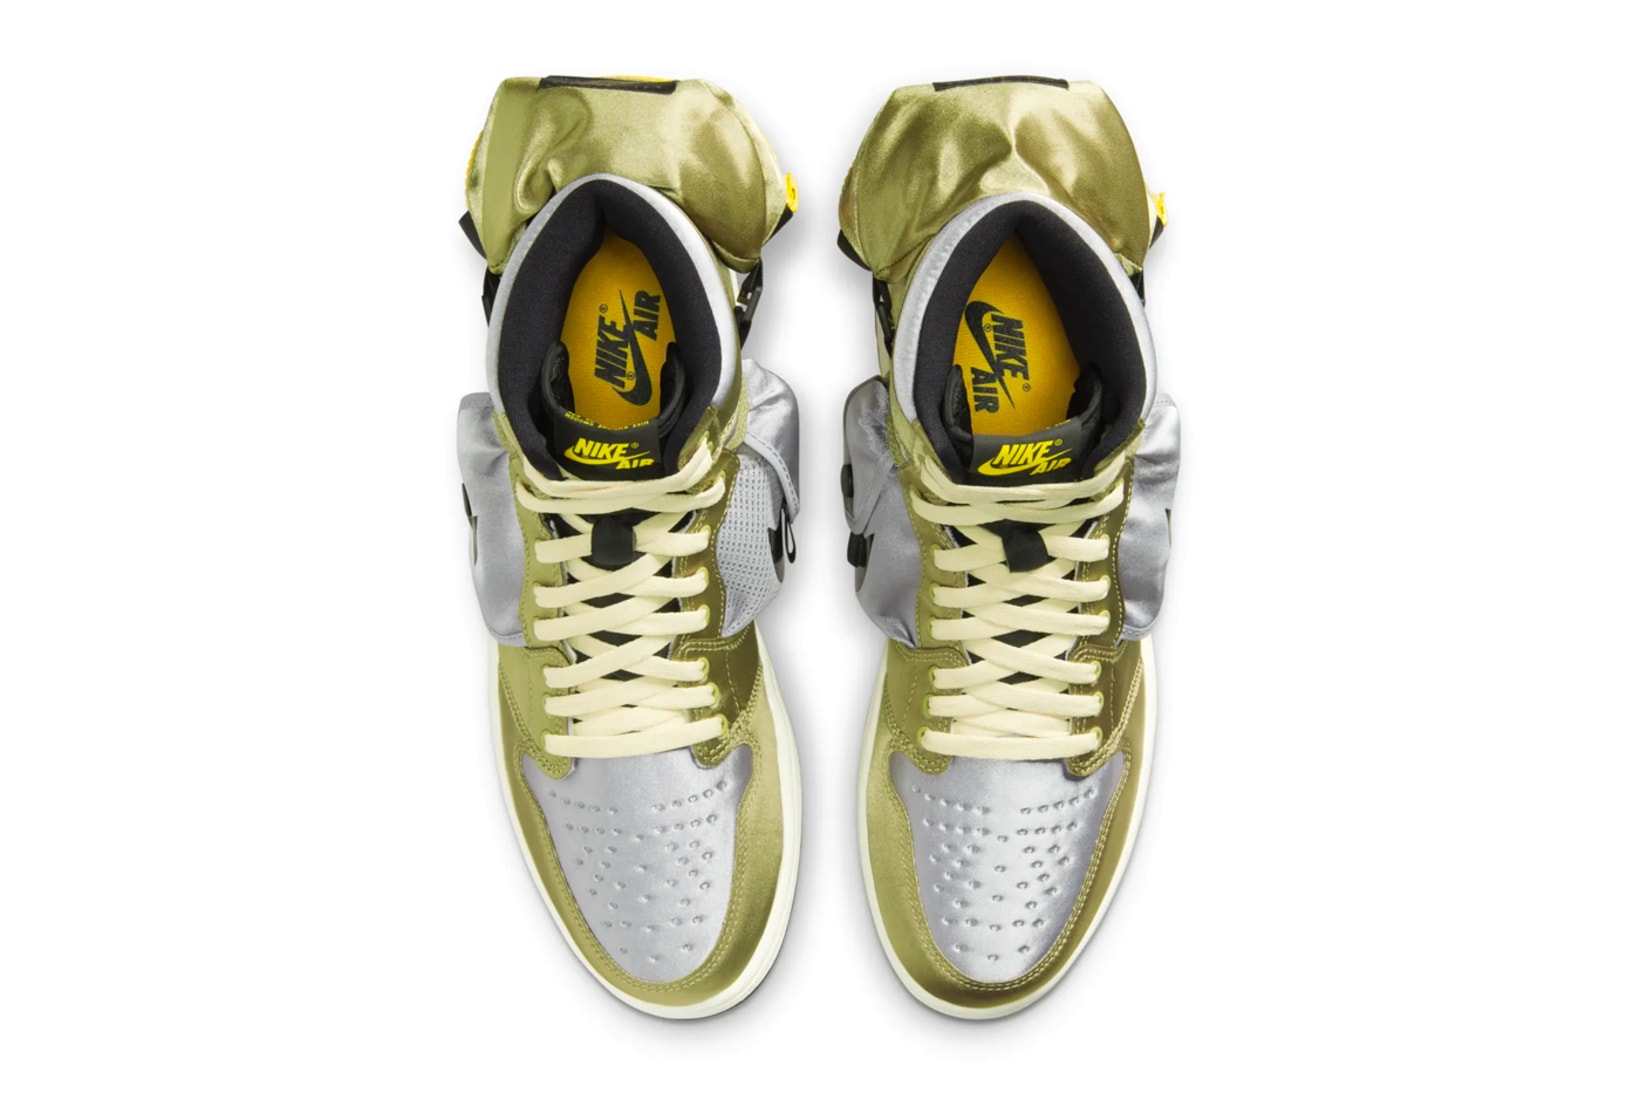 Nike Air Jordan 1 Utility “Neutral Olive” Release Info